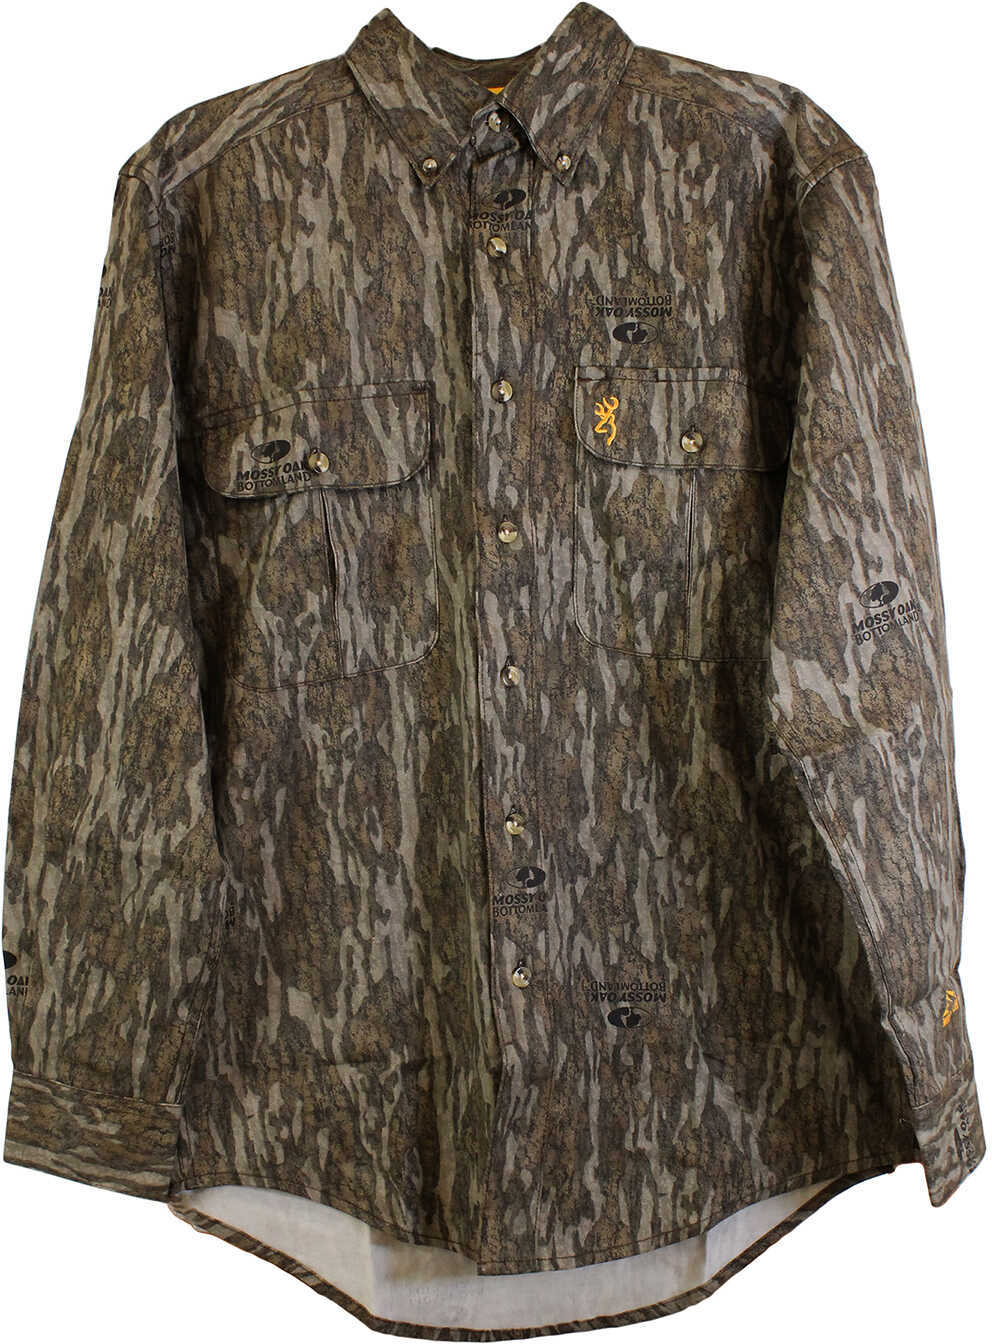 Browning Wasatch-CB Long Sleeve Shirt Mossy Oak Original Bottomlands, Large